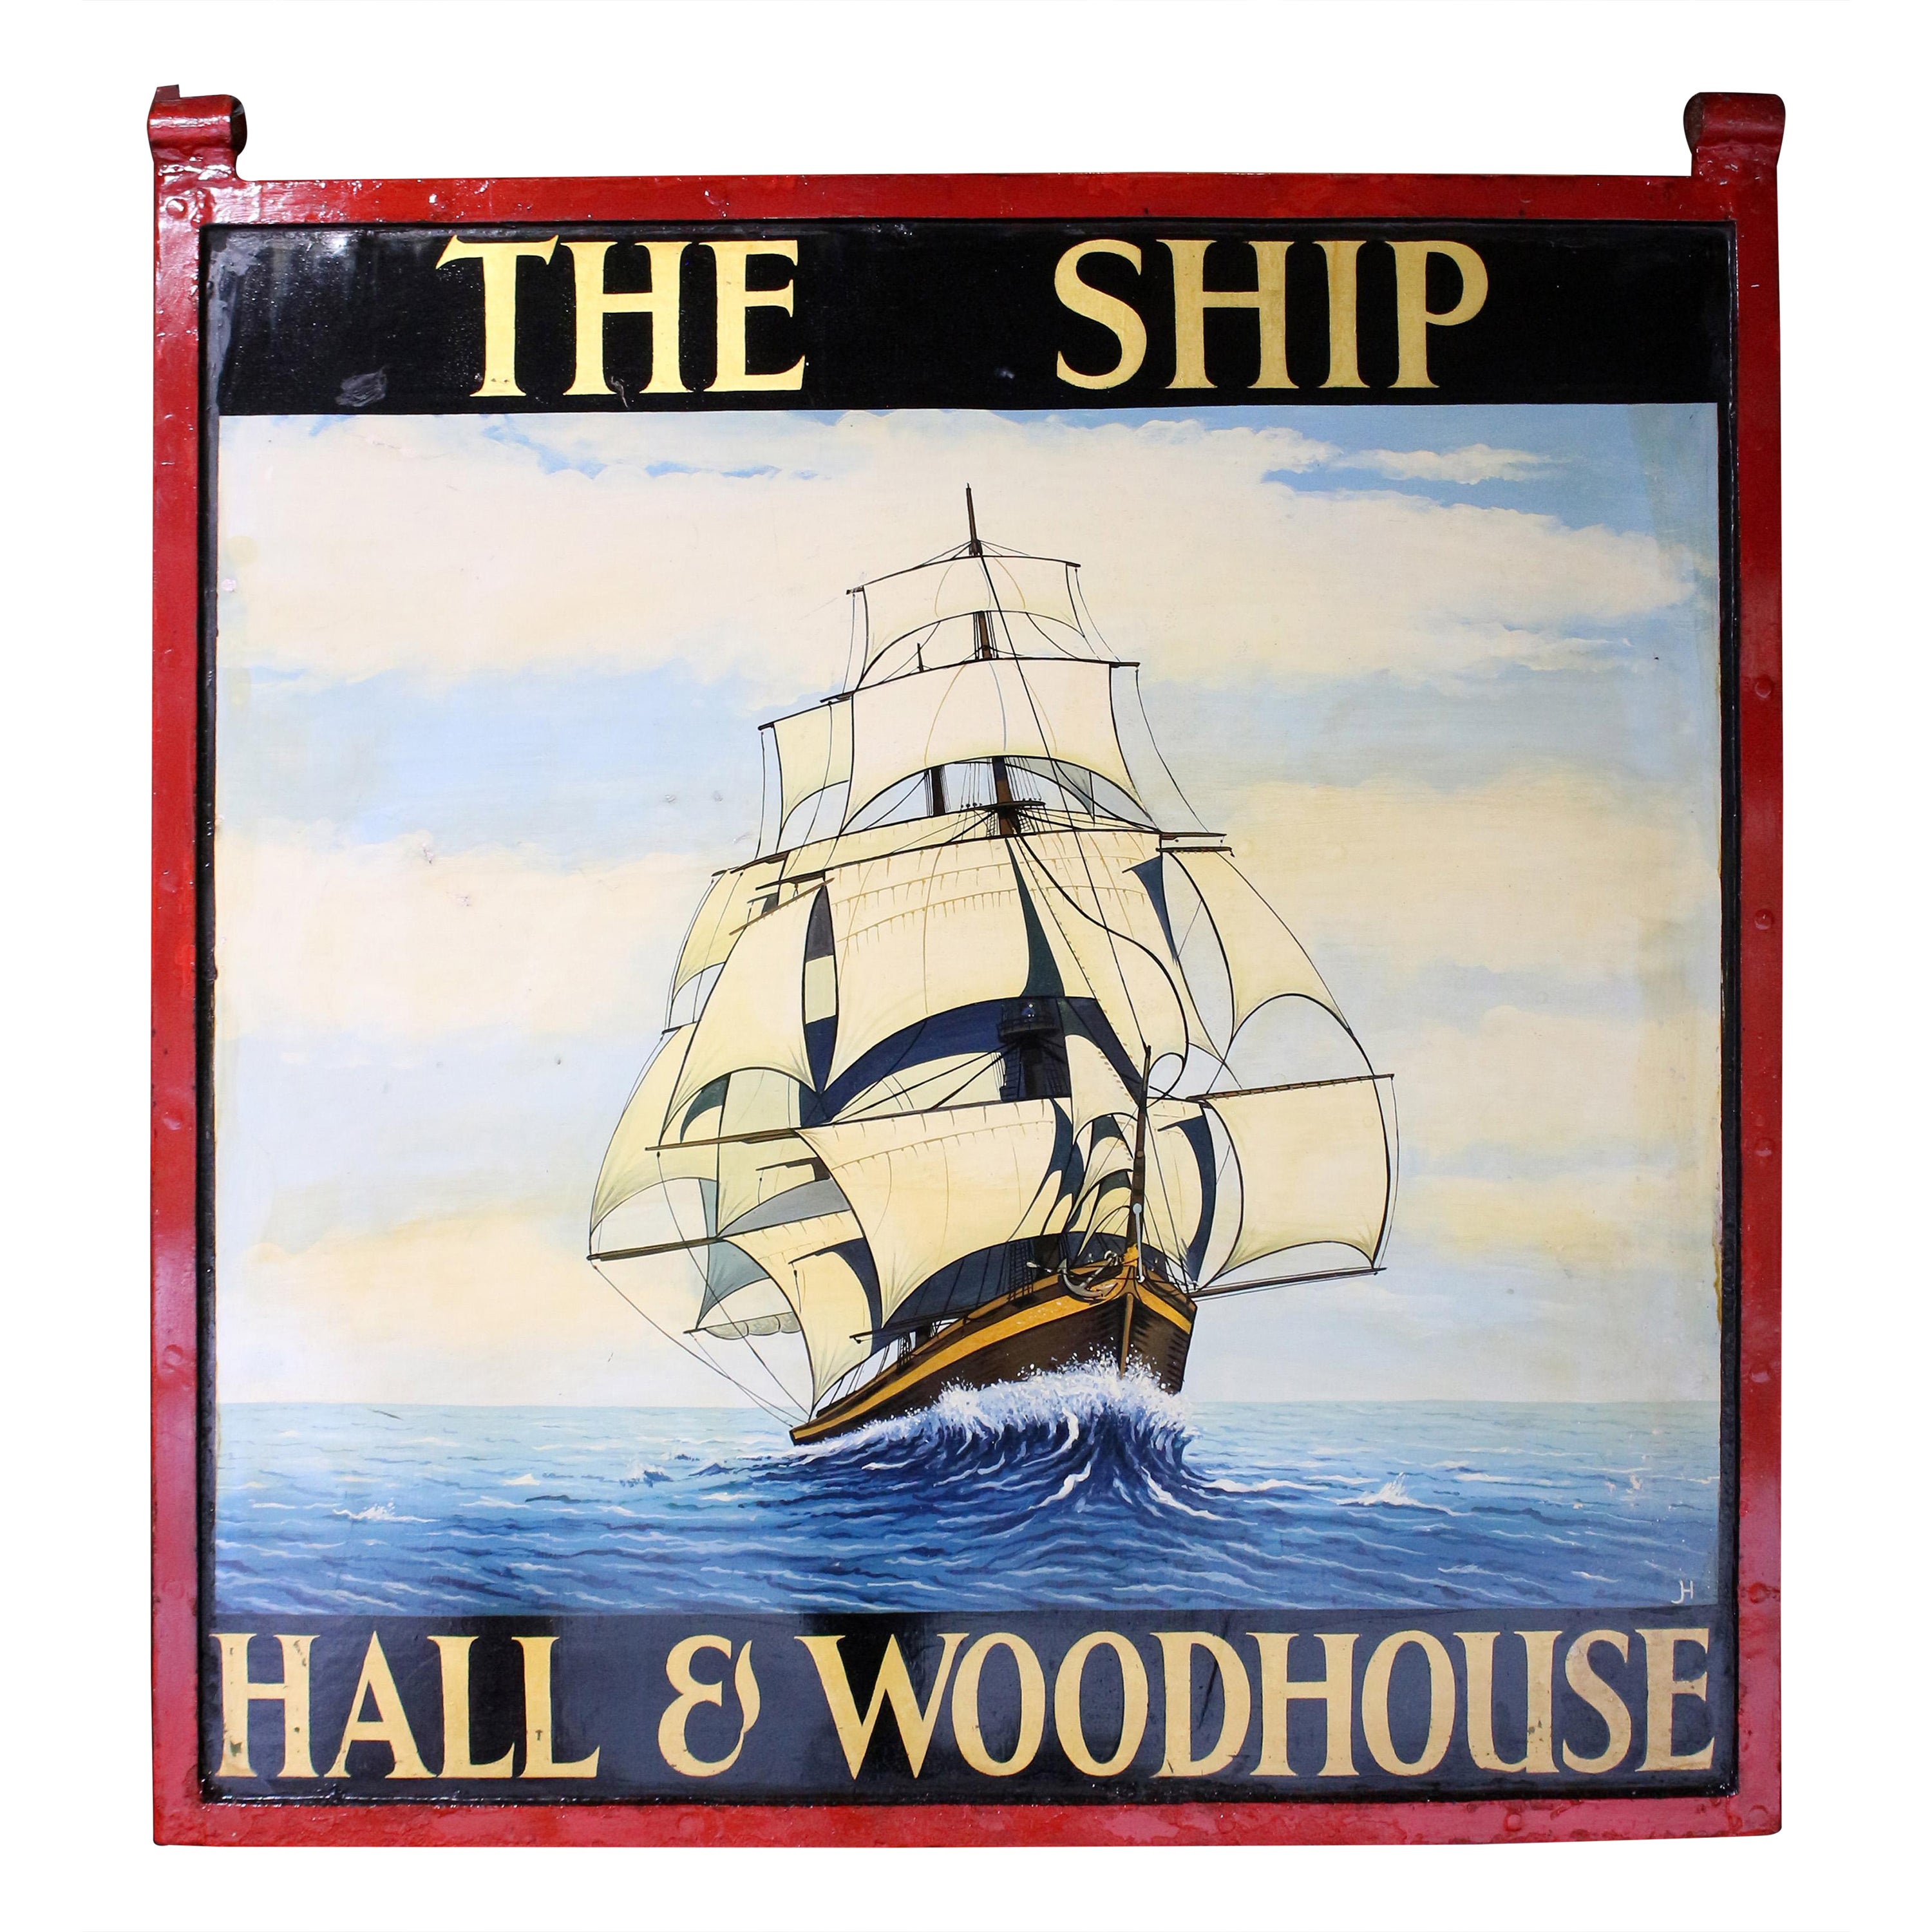 Vintage Pub Sign for "The Ship" Pub For Sale